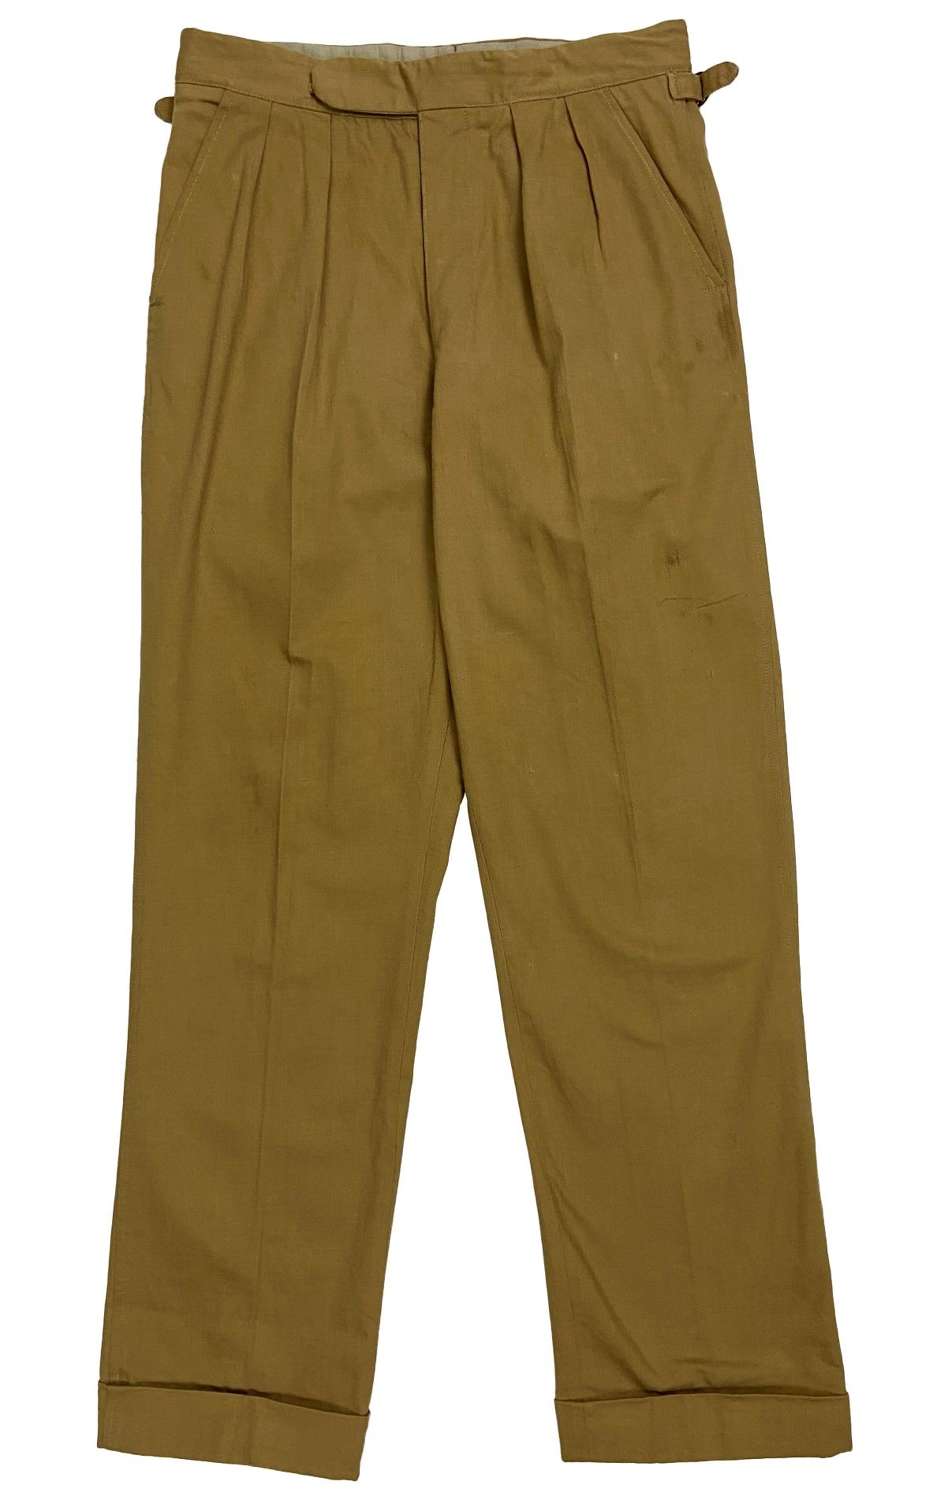 Original 1960s British Khaki Drill Trousers